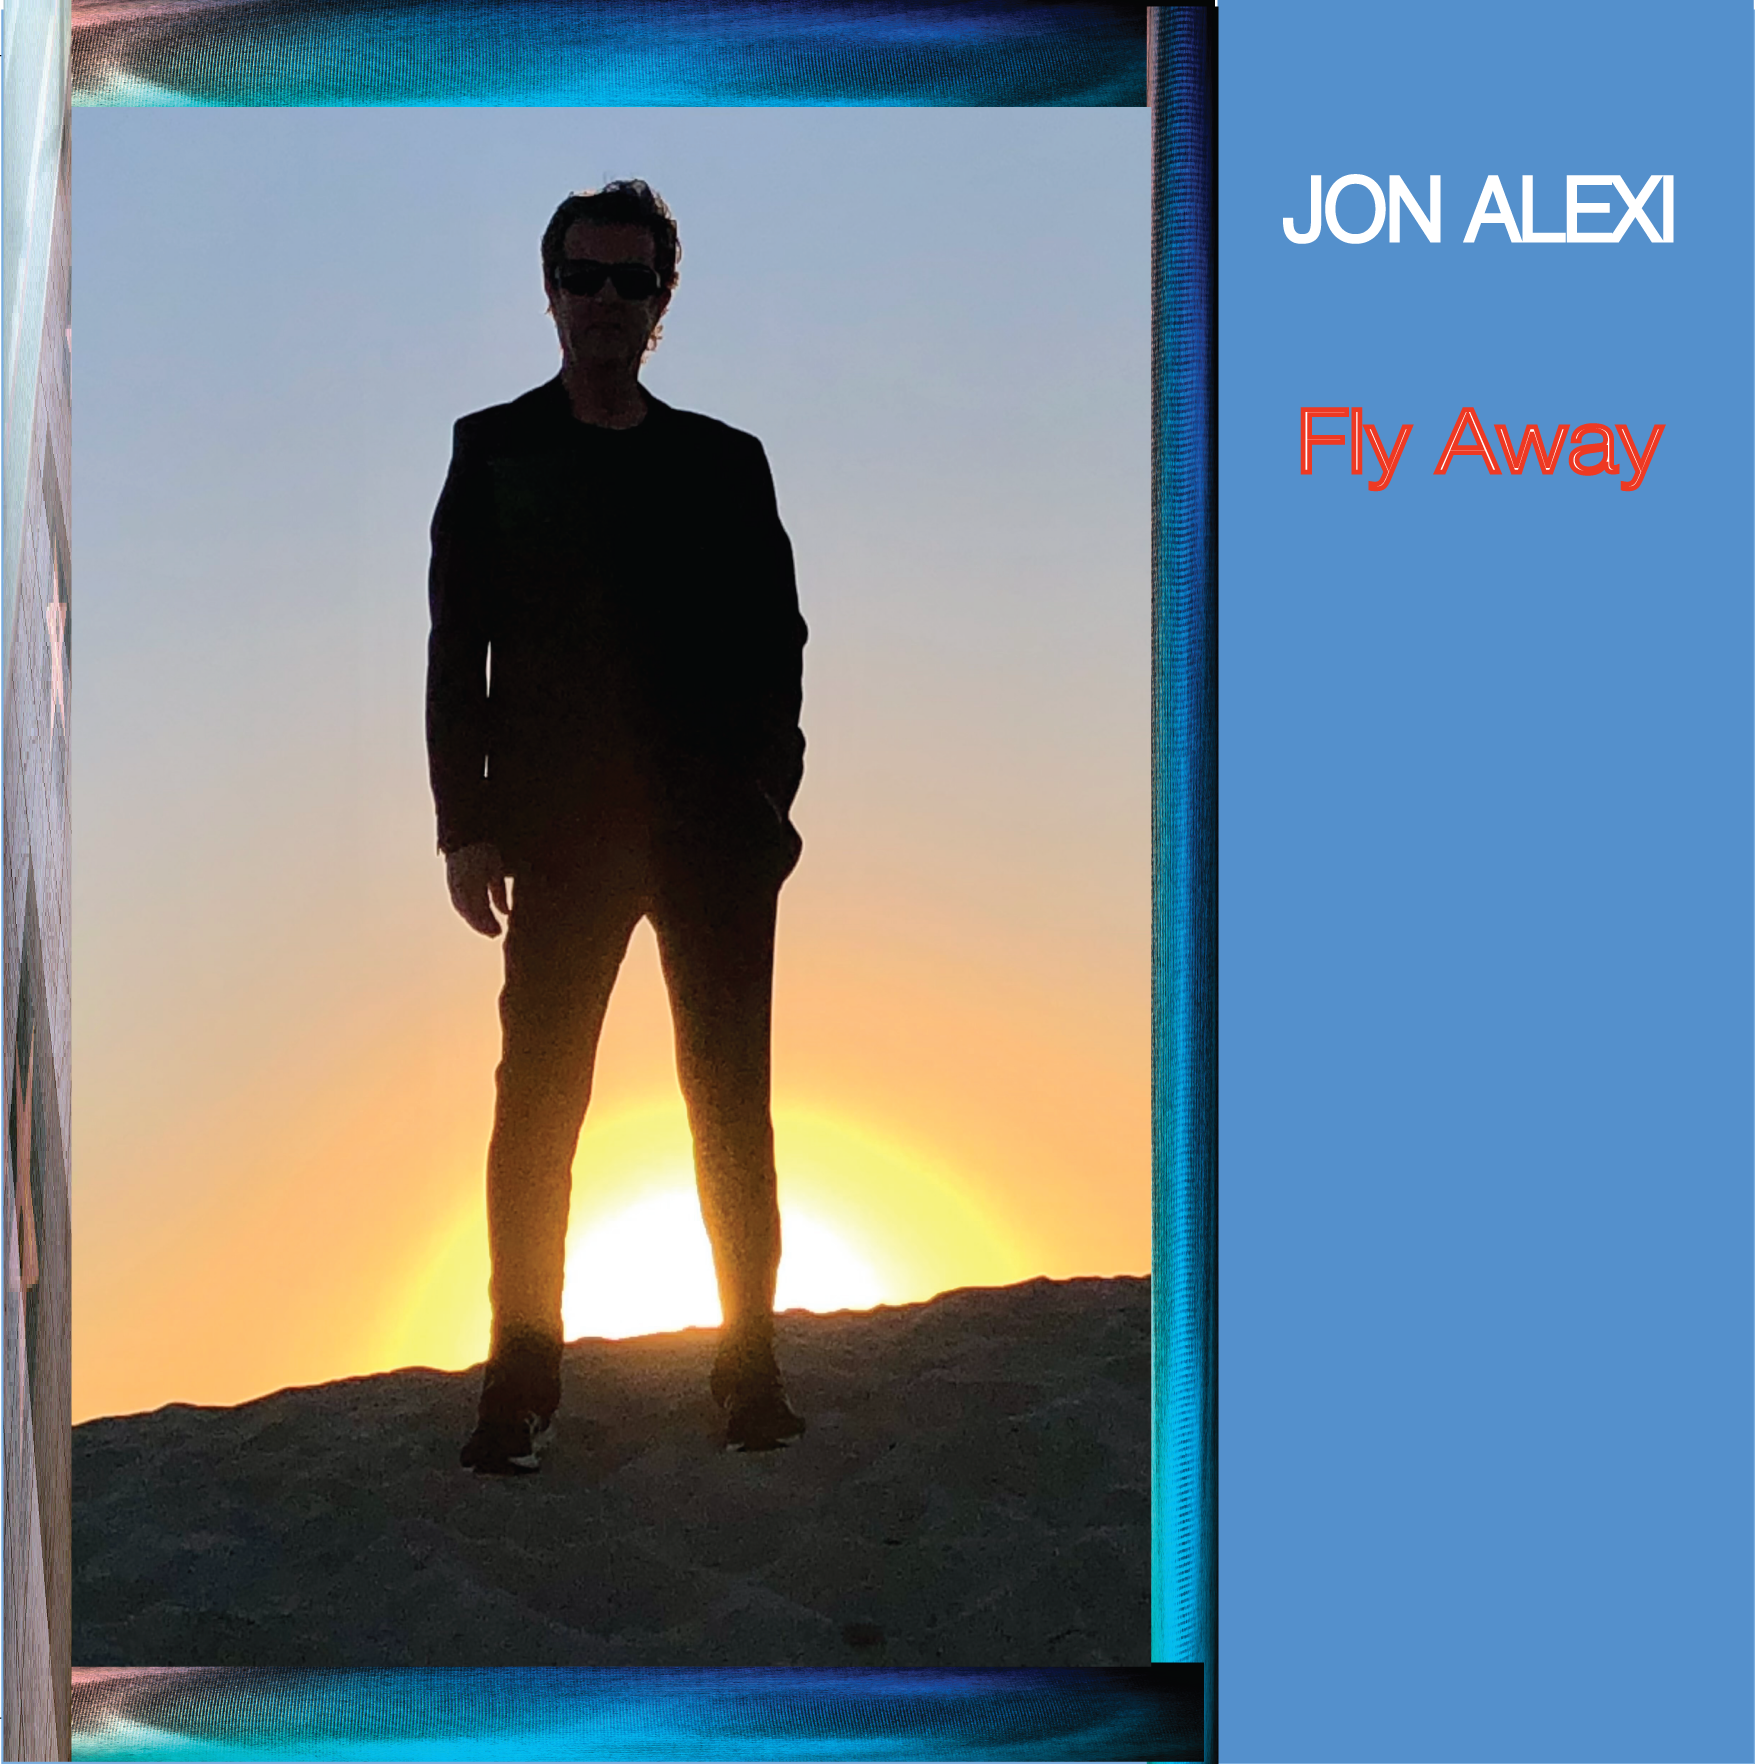 CD100_out Jon Alexi Fly Away